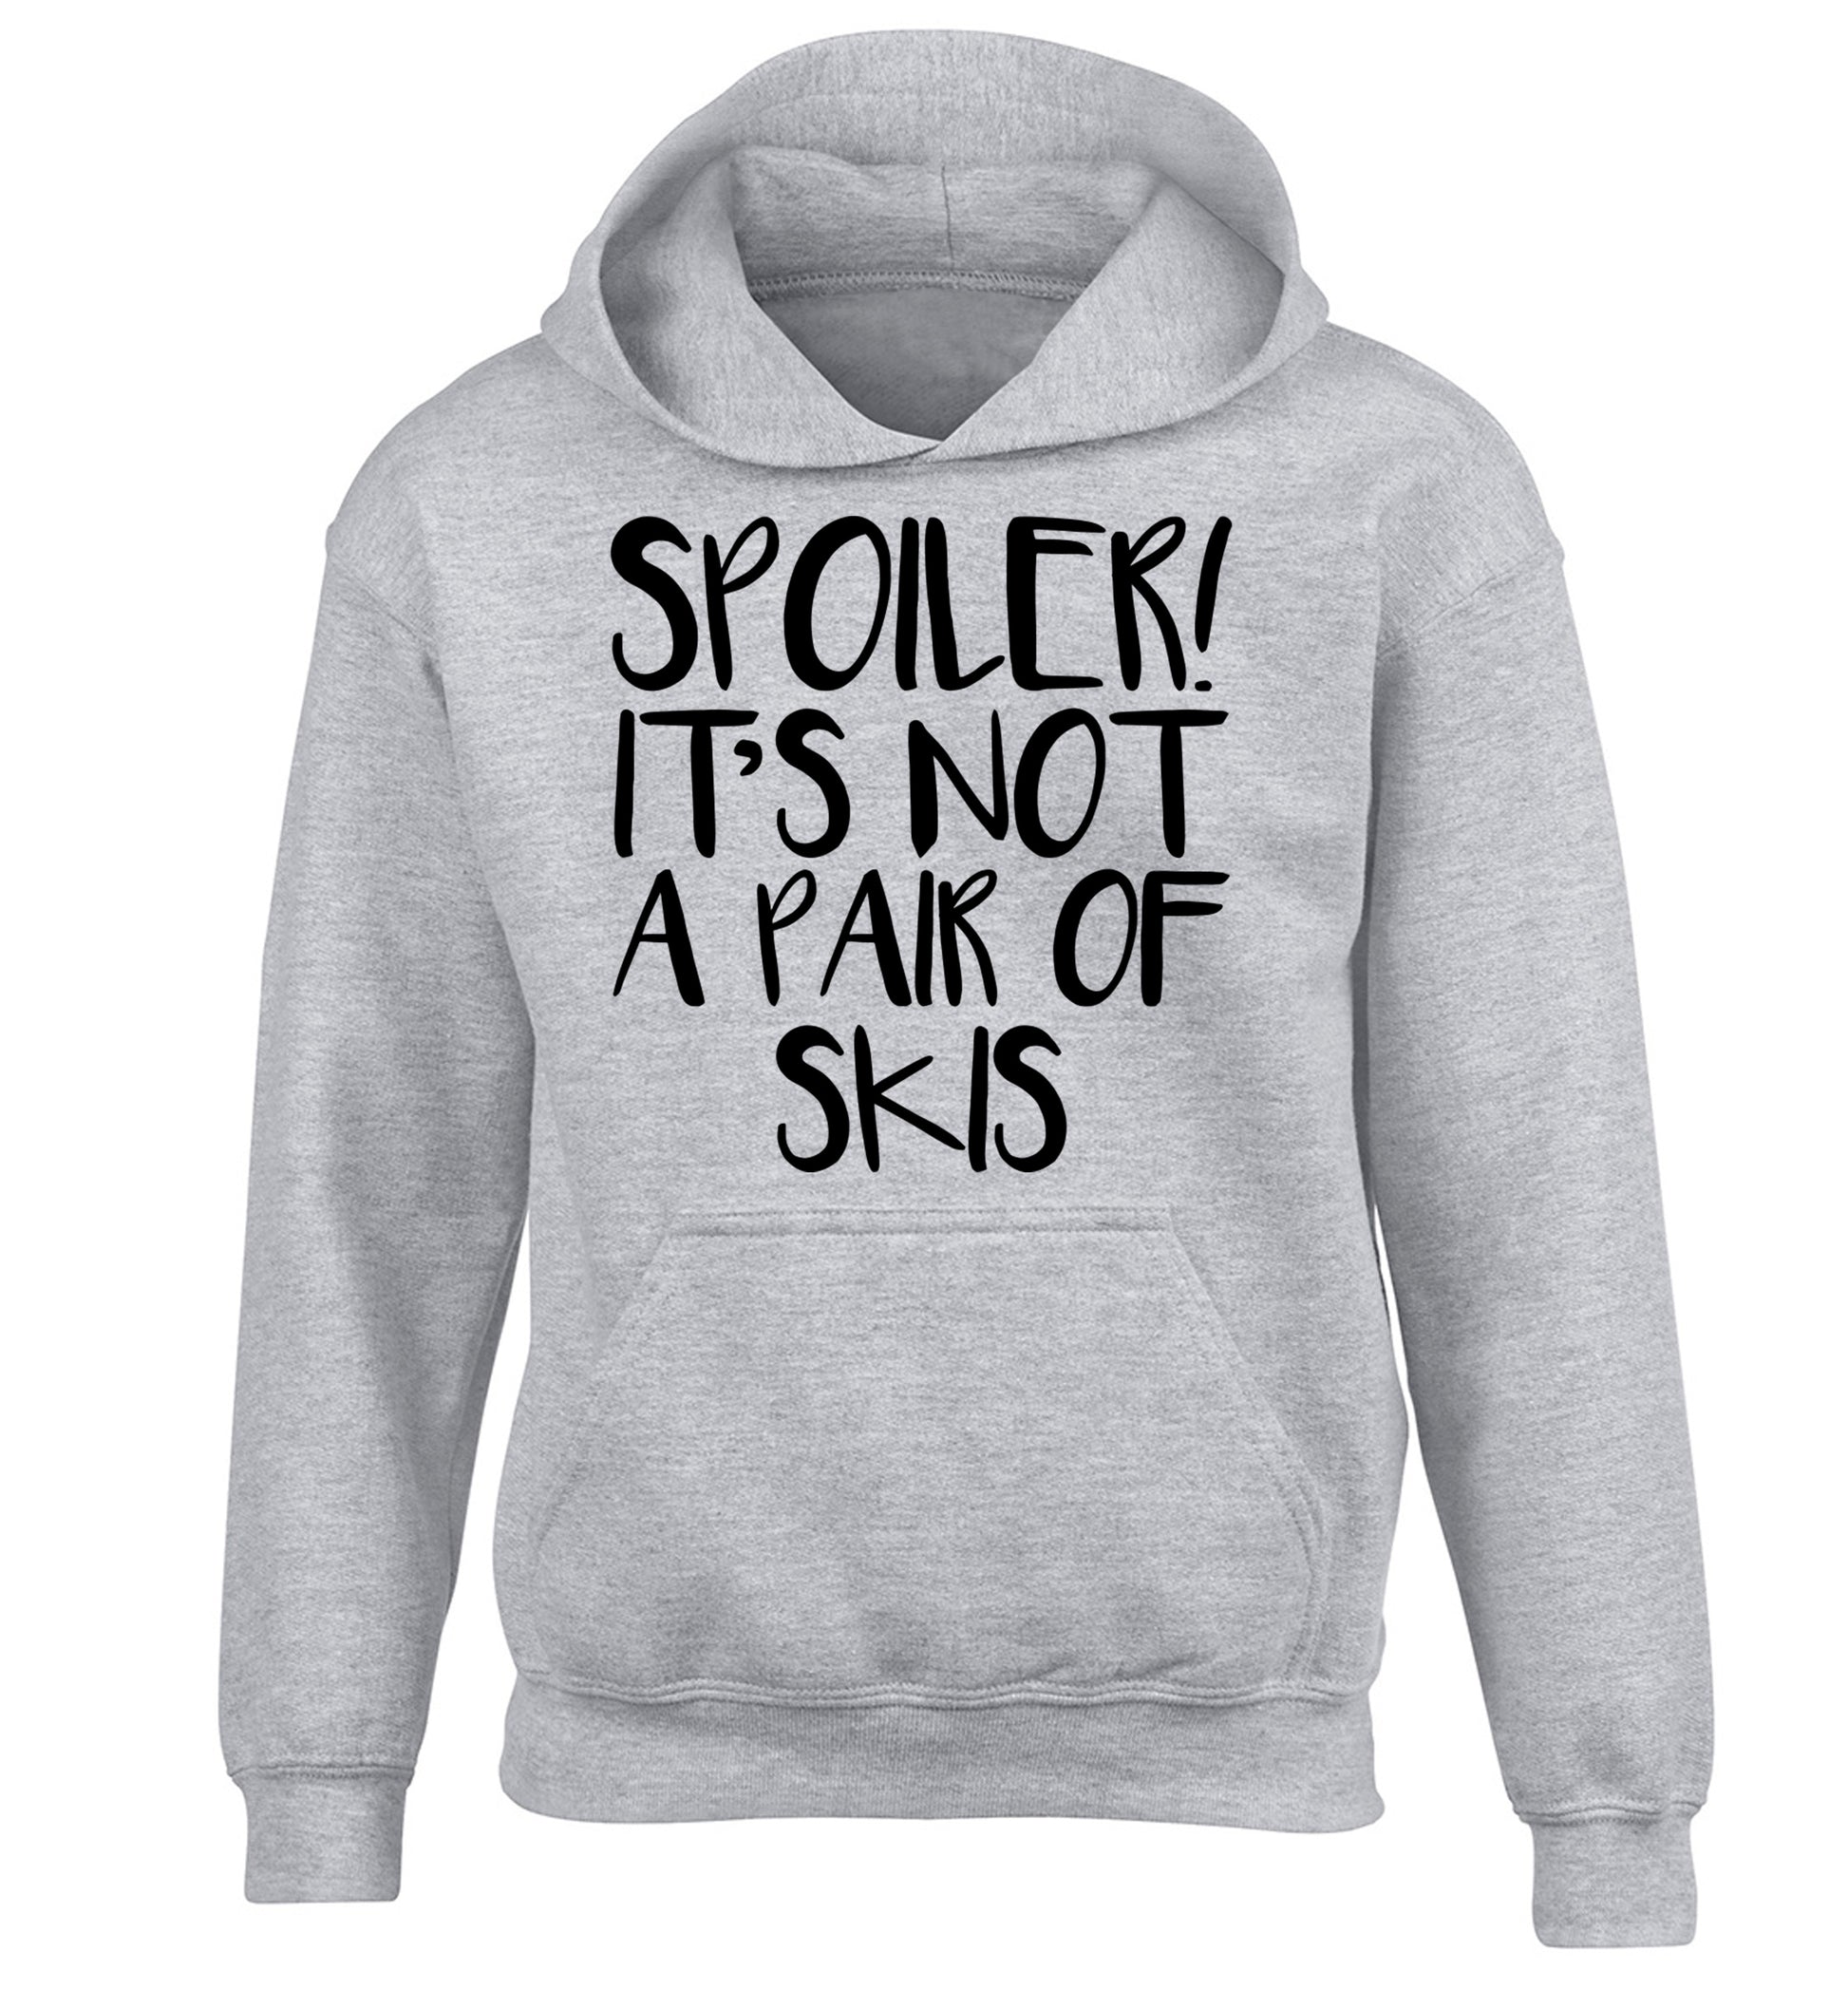 Spoiler it's not a pair of skis children's grey hoodie 12-13 Years